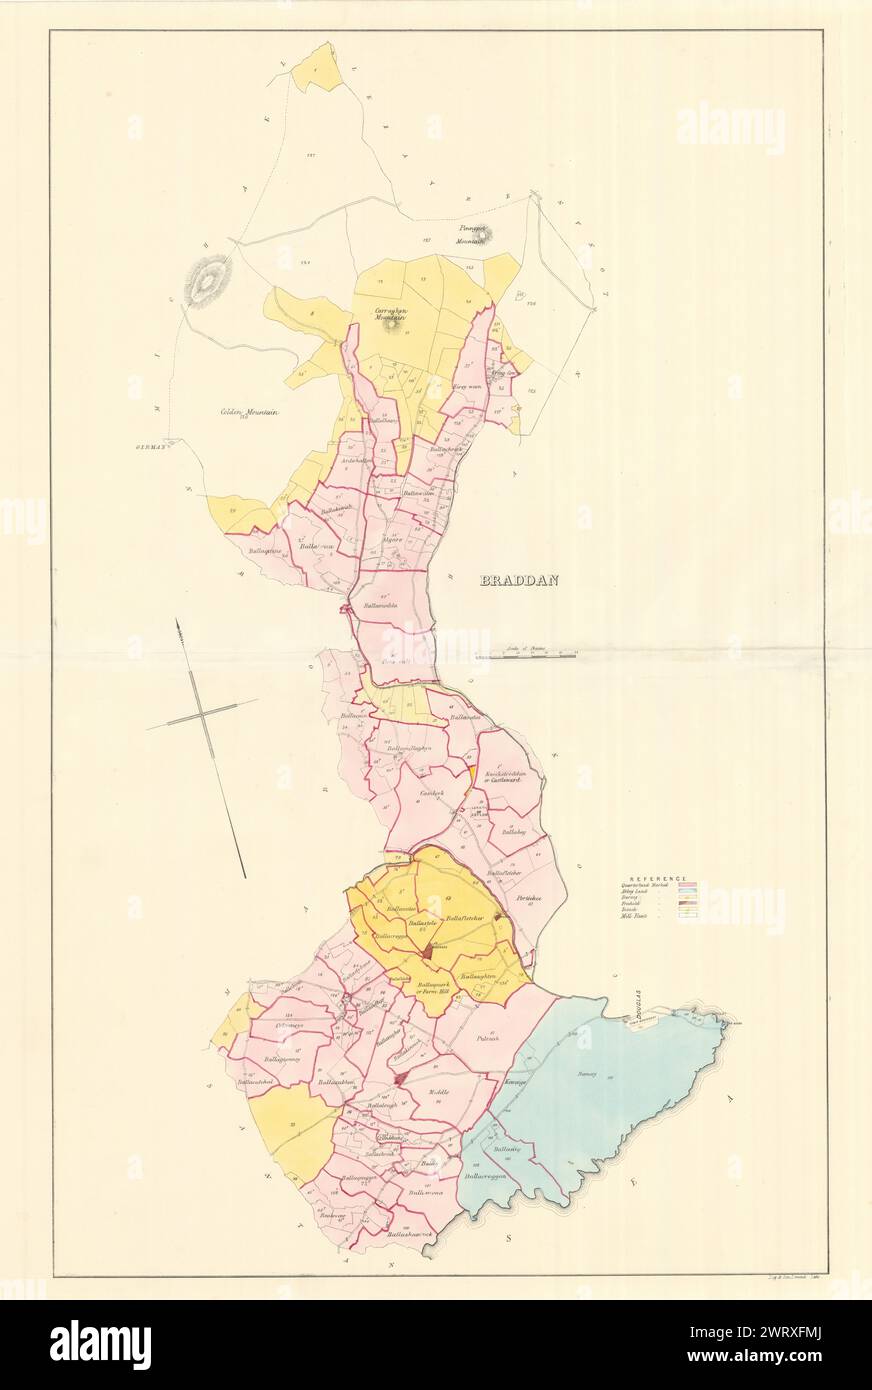 Braddan Parish, Middle Sheading, Isle of Man by James Woods 1829 old map Stock Photo